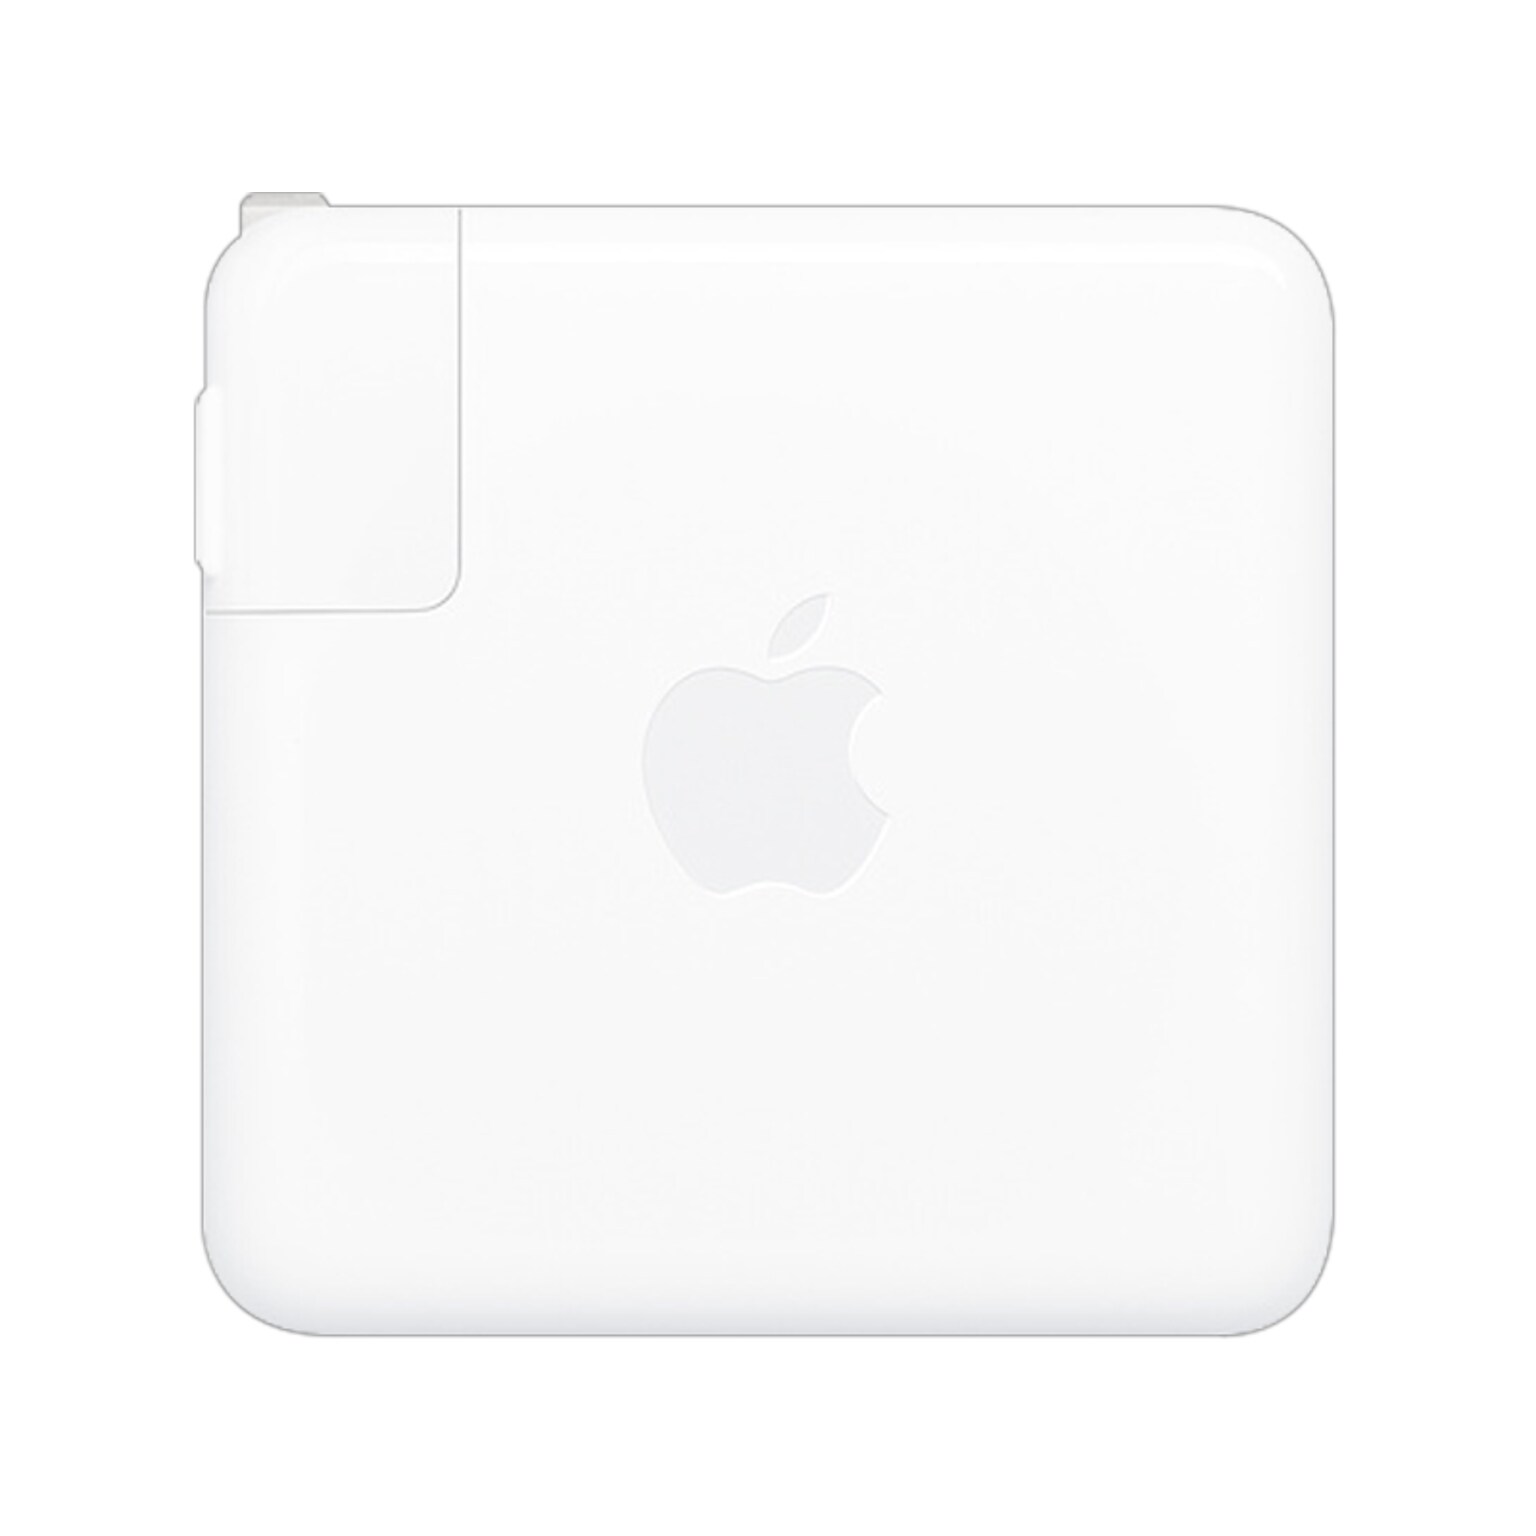 Apple 96W USB-C Power Adapter for MacBook (MX0J2AM/A)